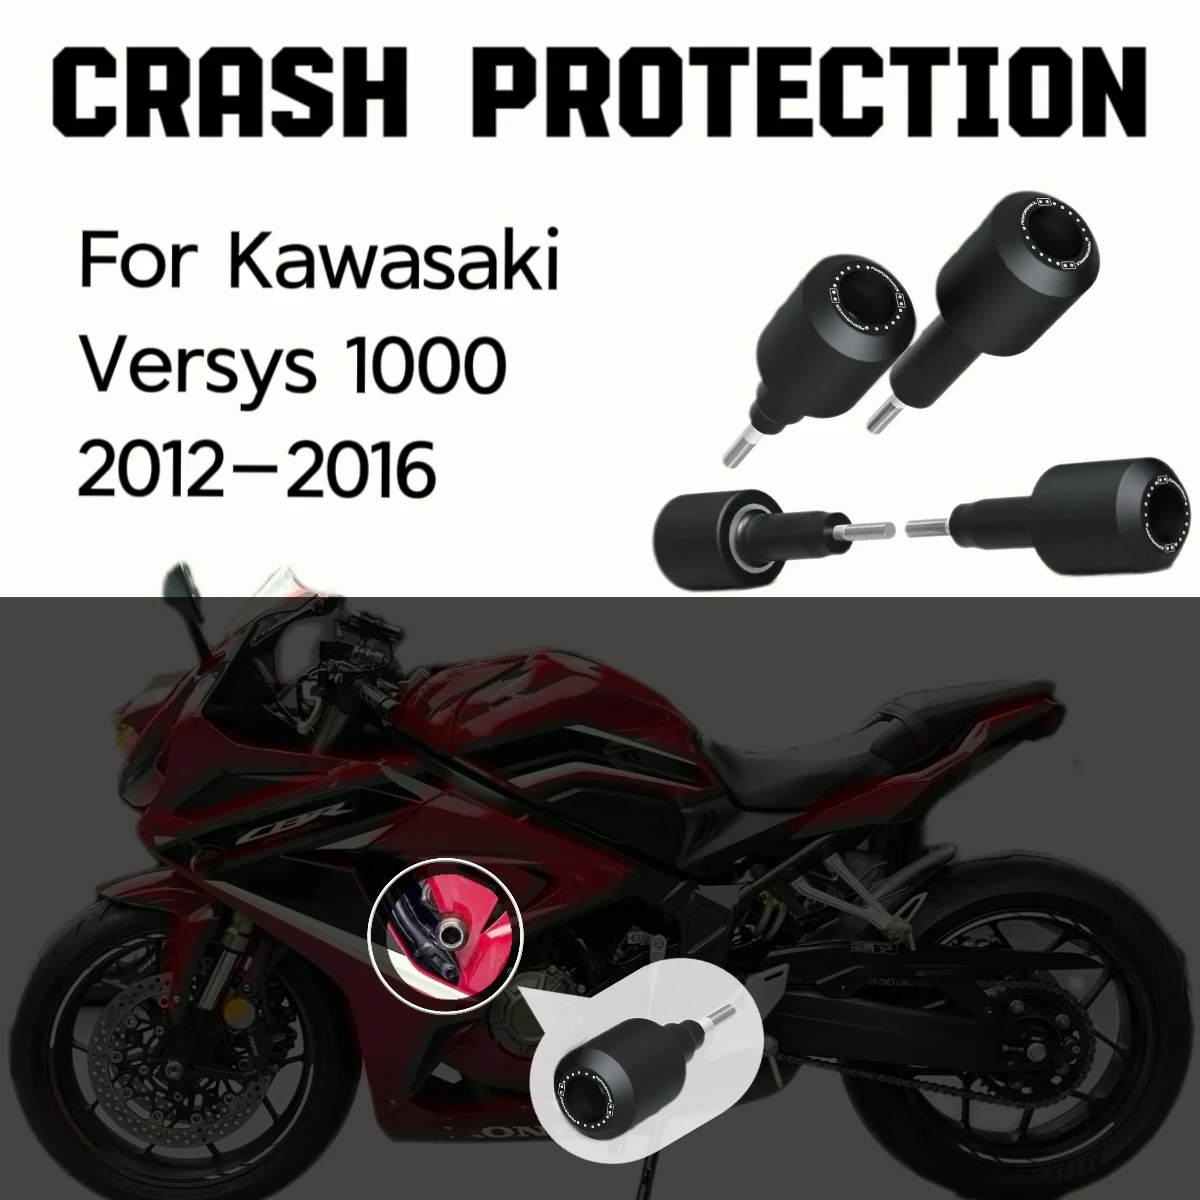 

Crash Protection Bobbins For Kawasaki Versys 1000 2012-2016 motorcycle accessories for protection